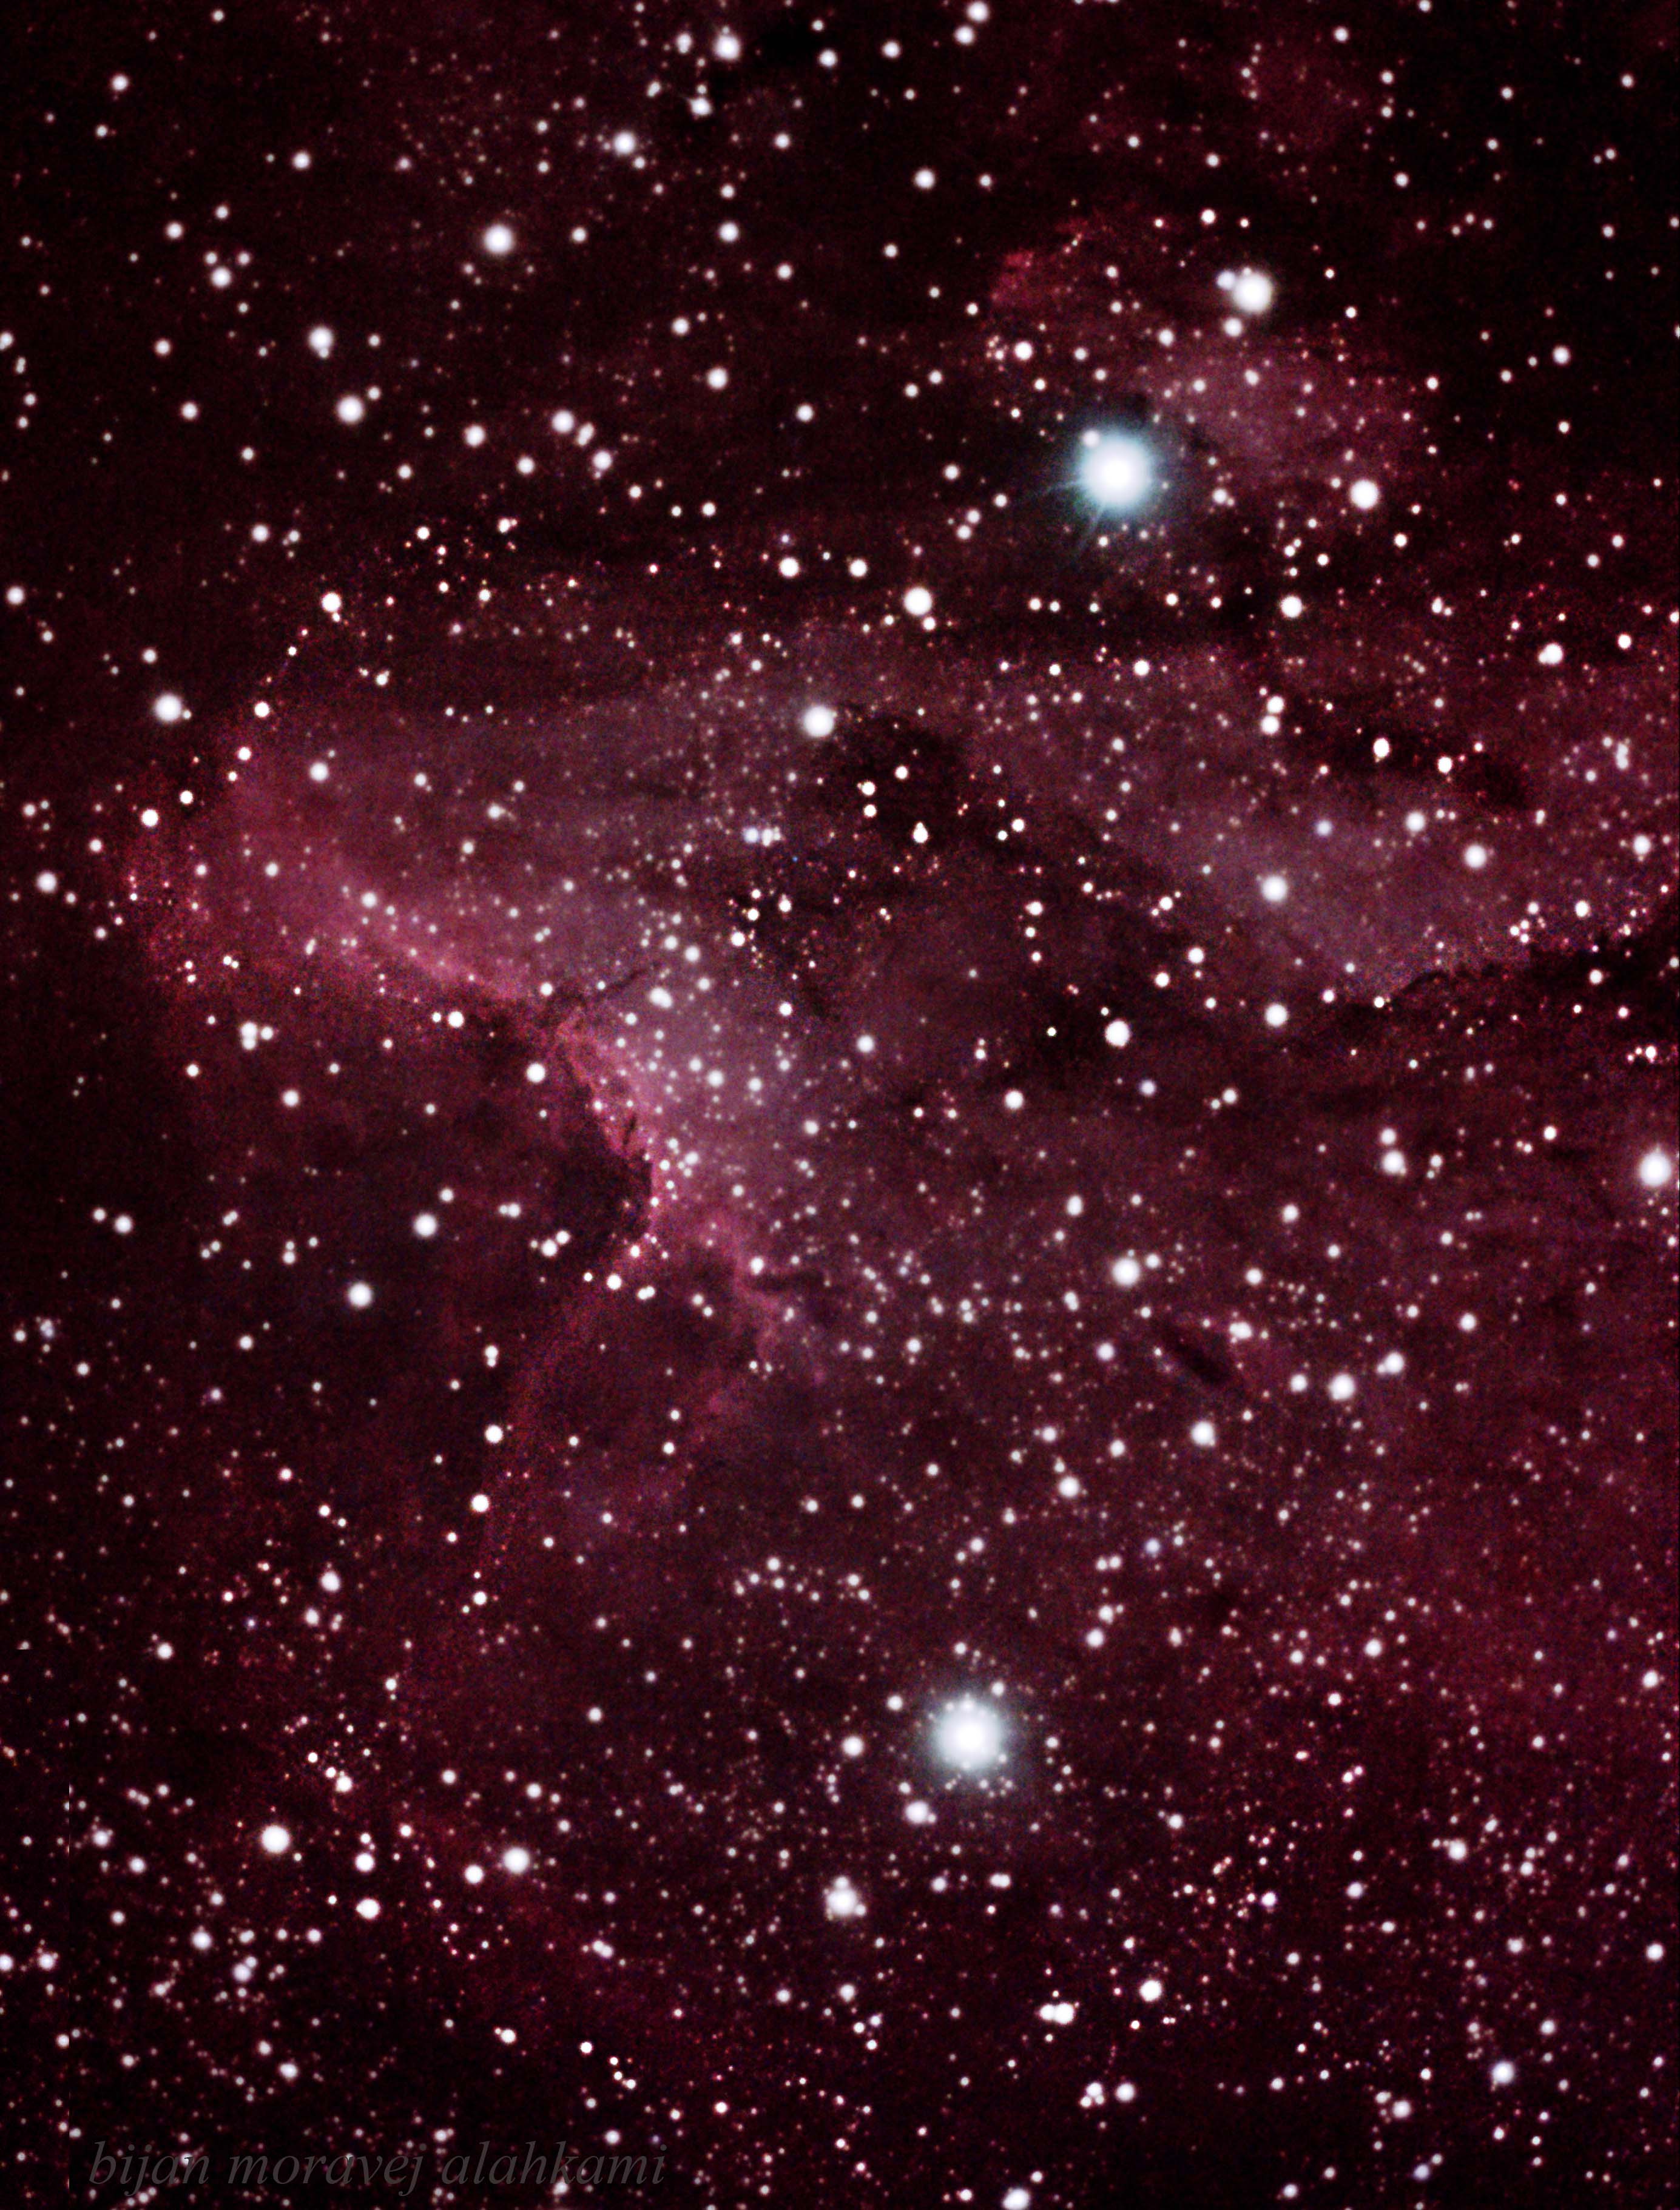 سحابی پلیکان .pelican nebula  ic 5070